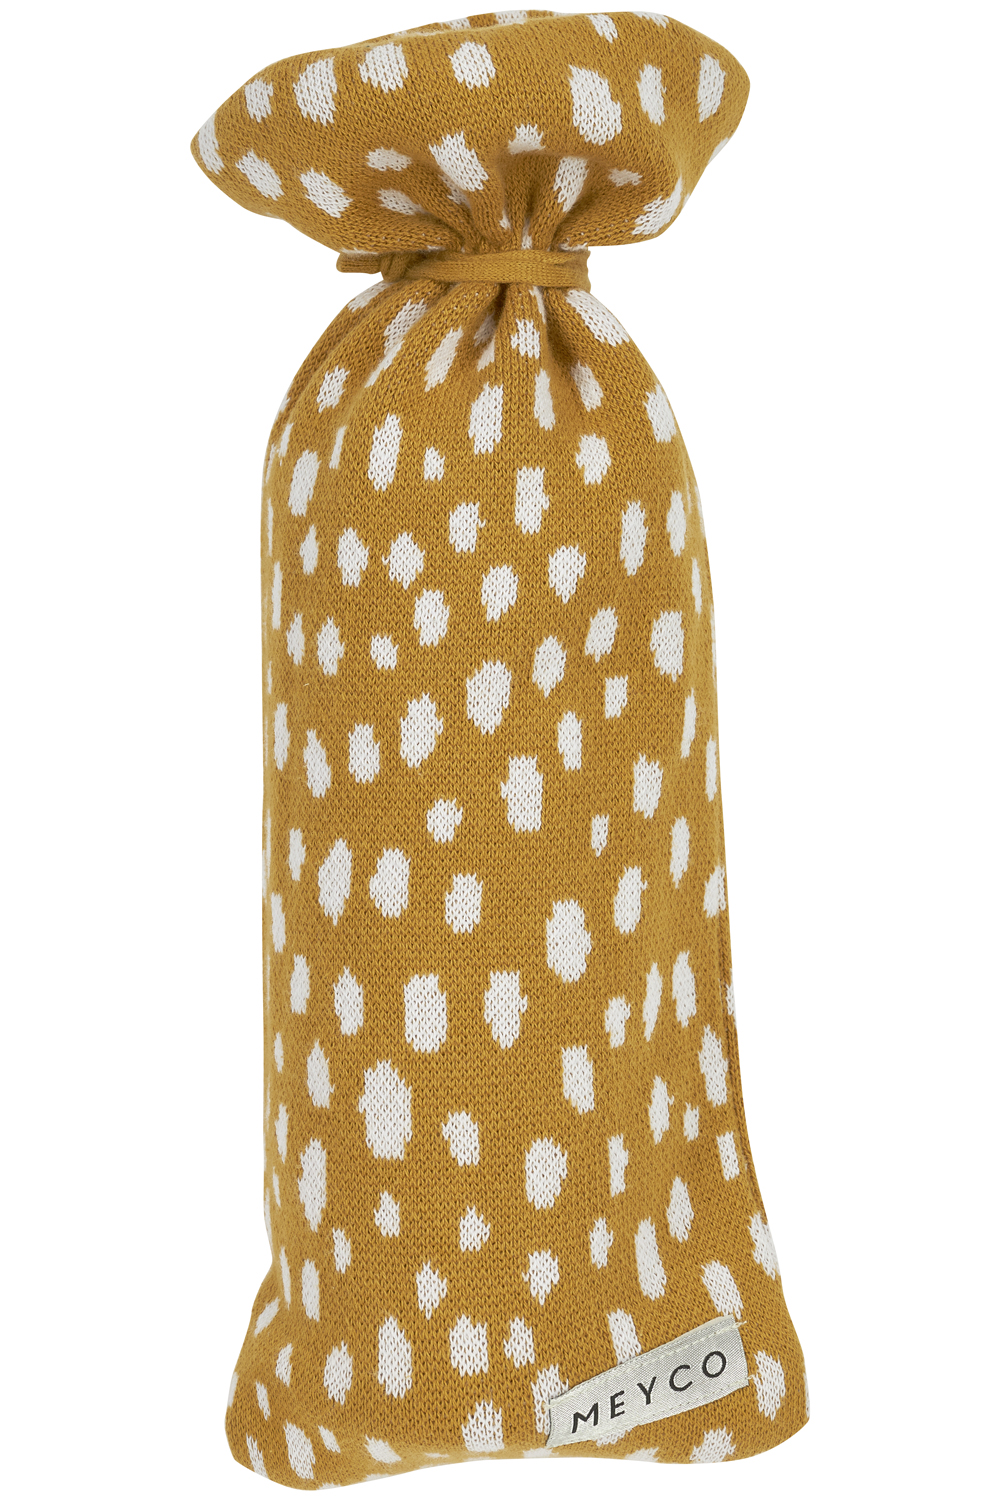 Hot water bottle cover Cheetah - honey gold